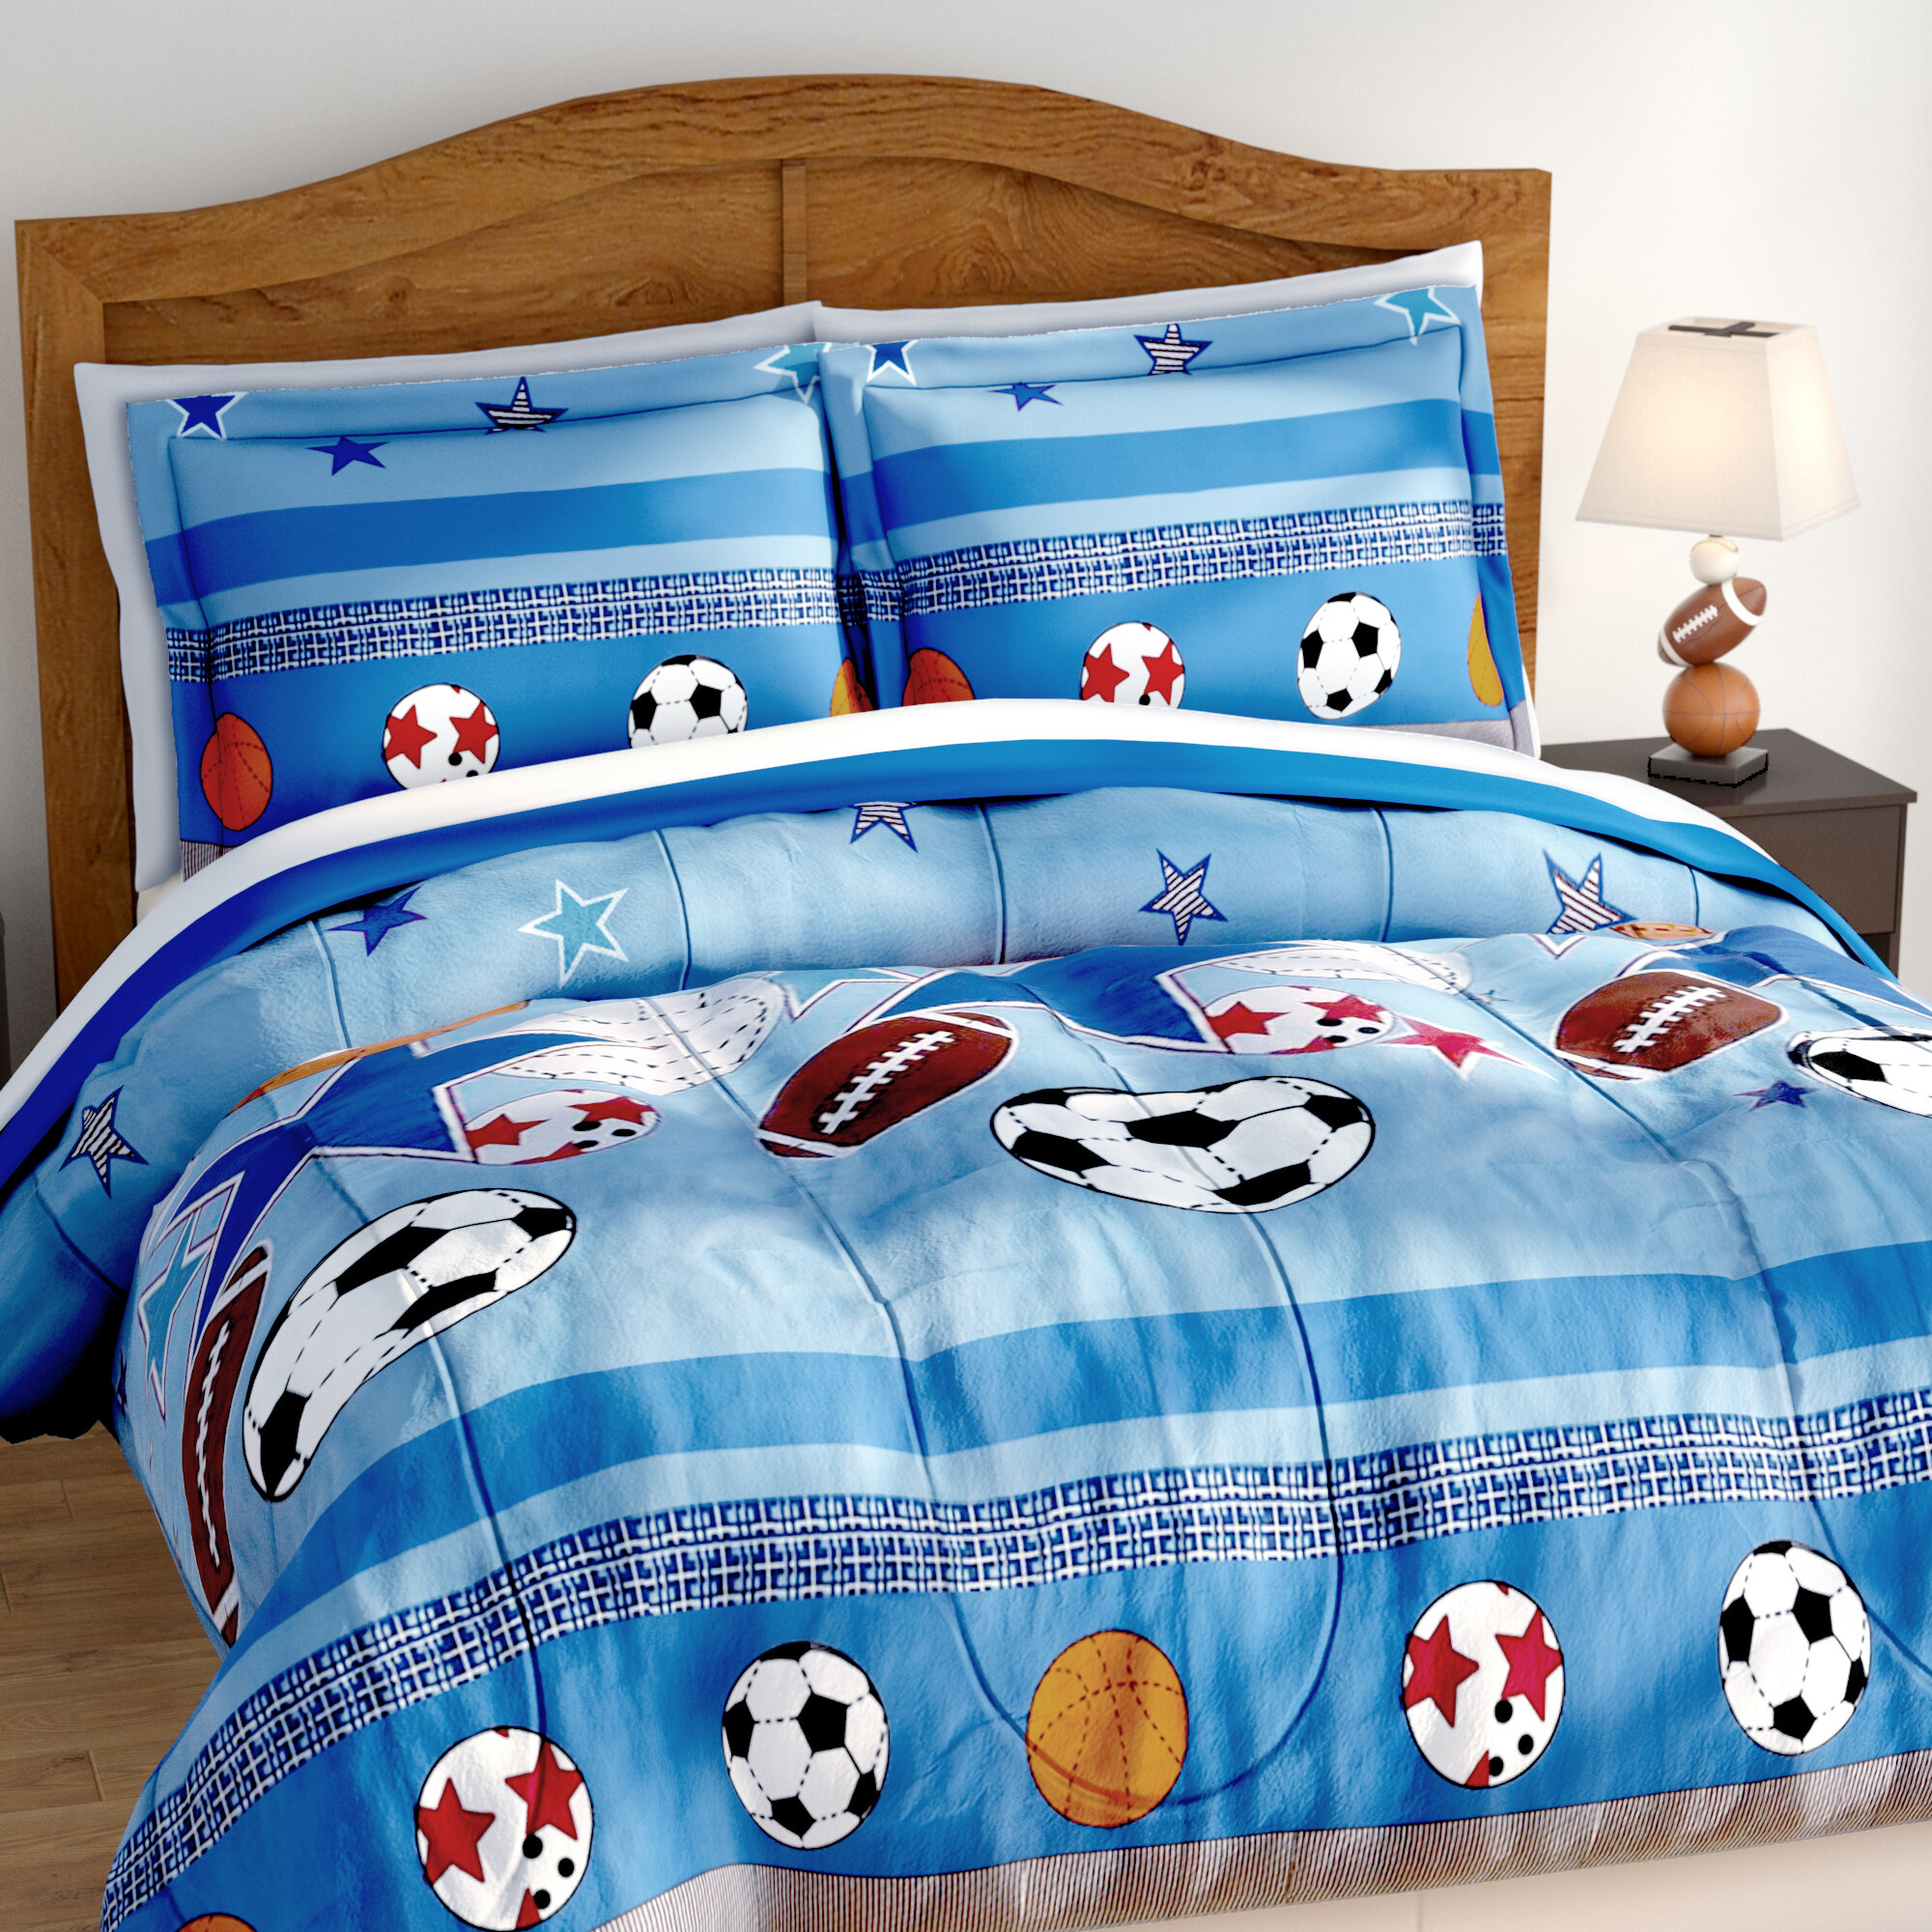 Bed Spread ALL STAR STARS SPORTS Comforter Twin REVERSIBLE Football Baseball 